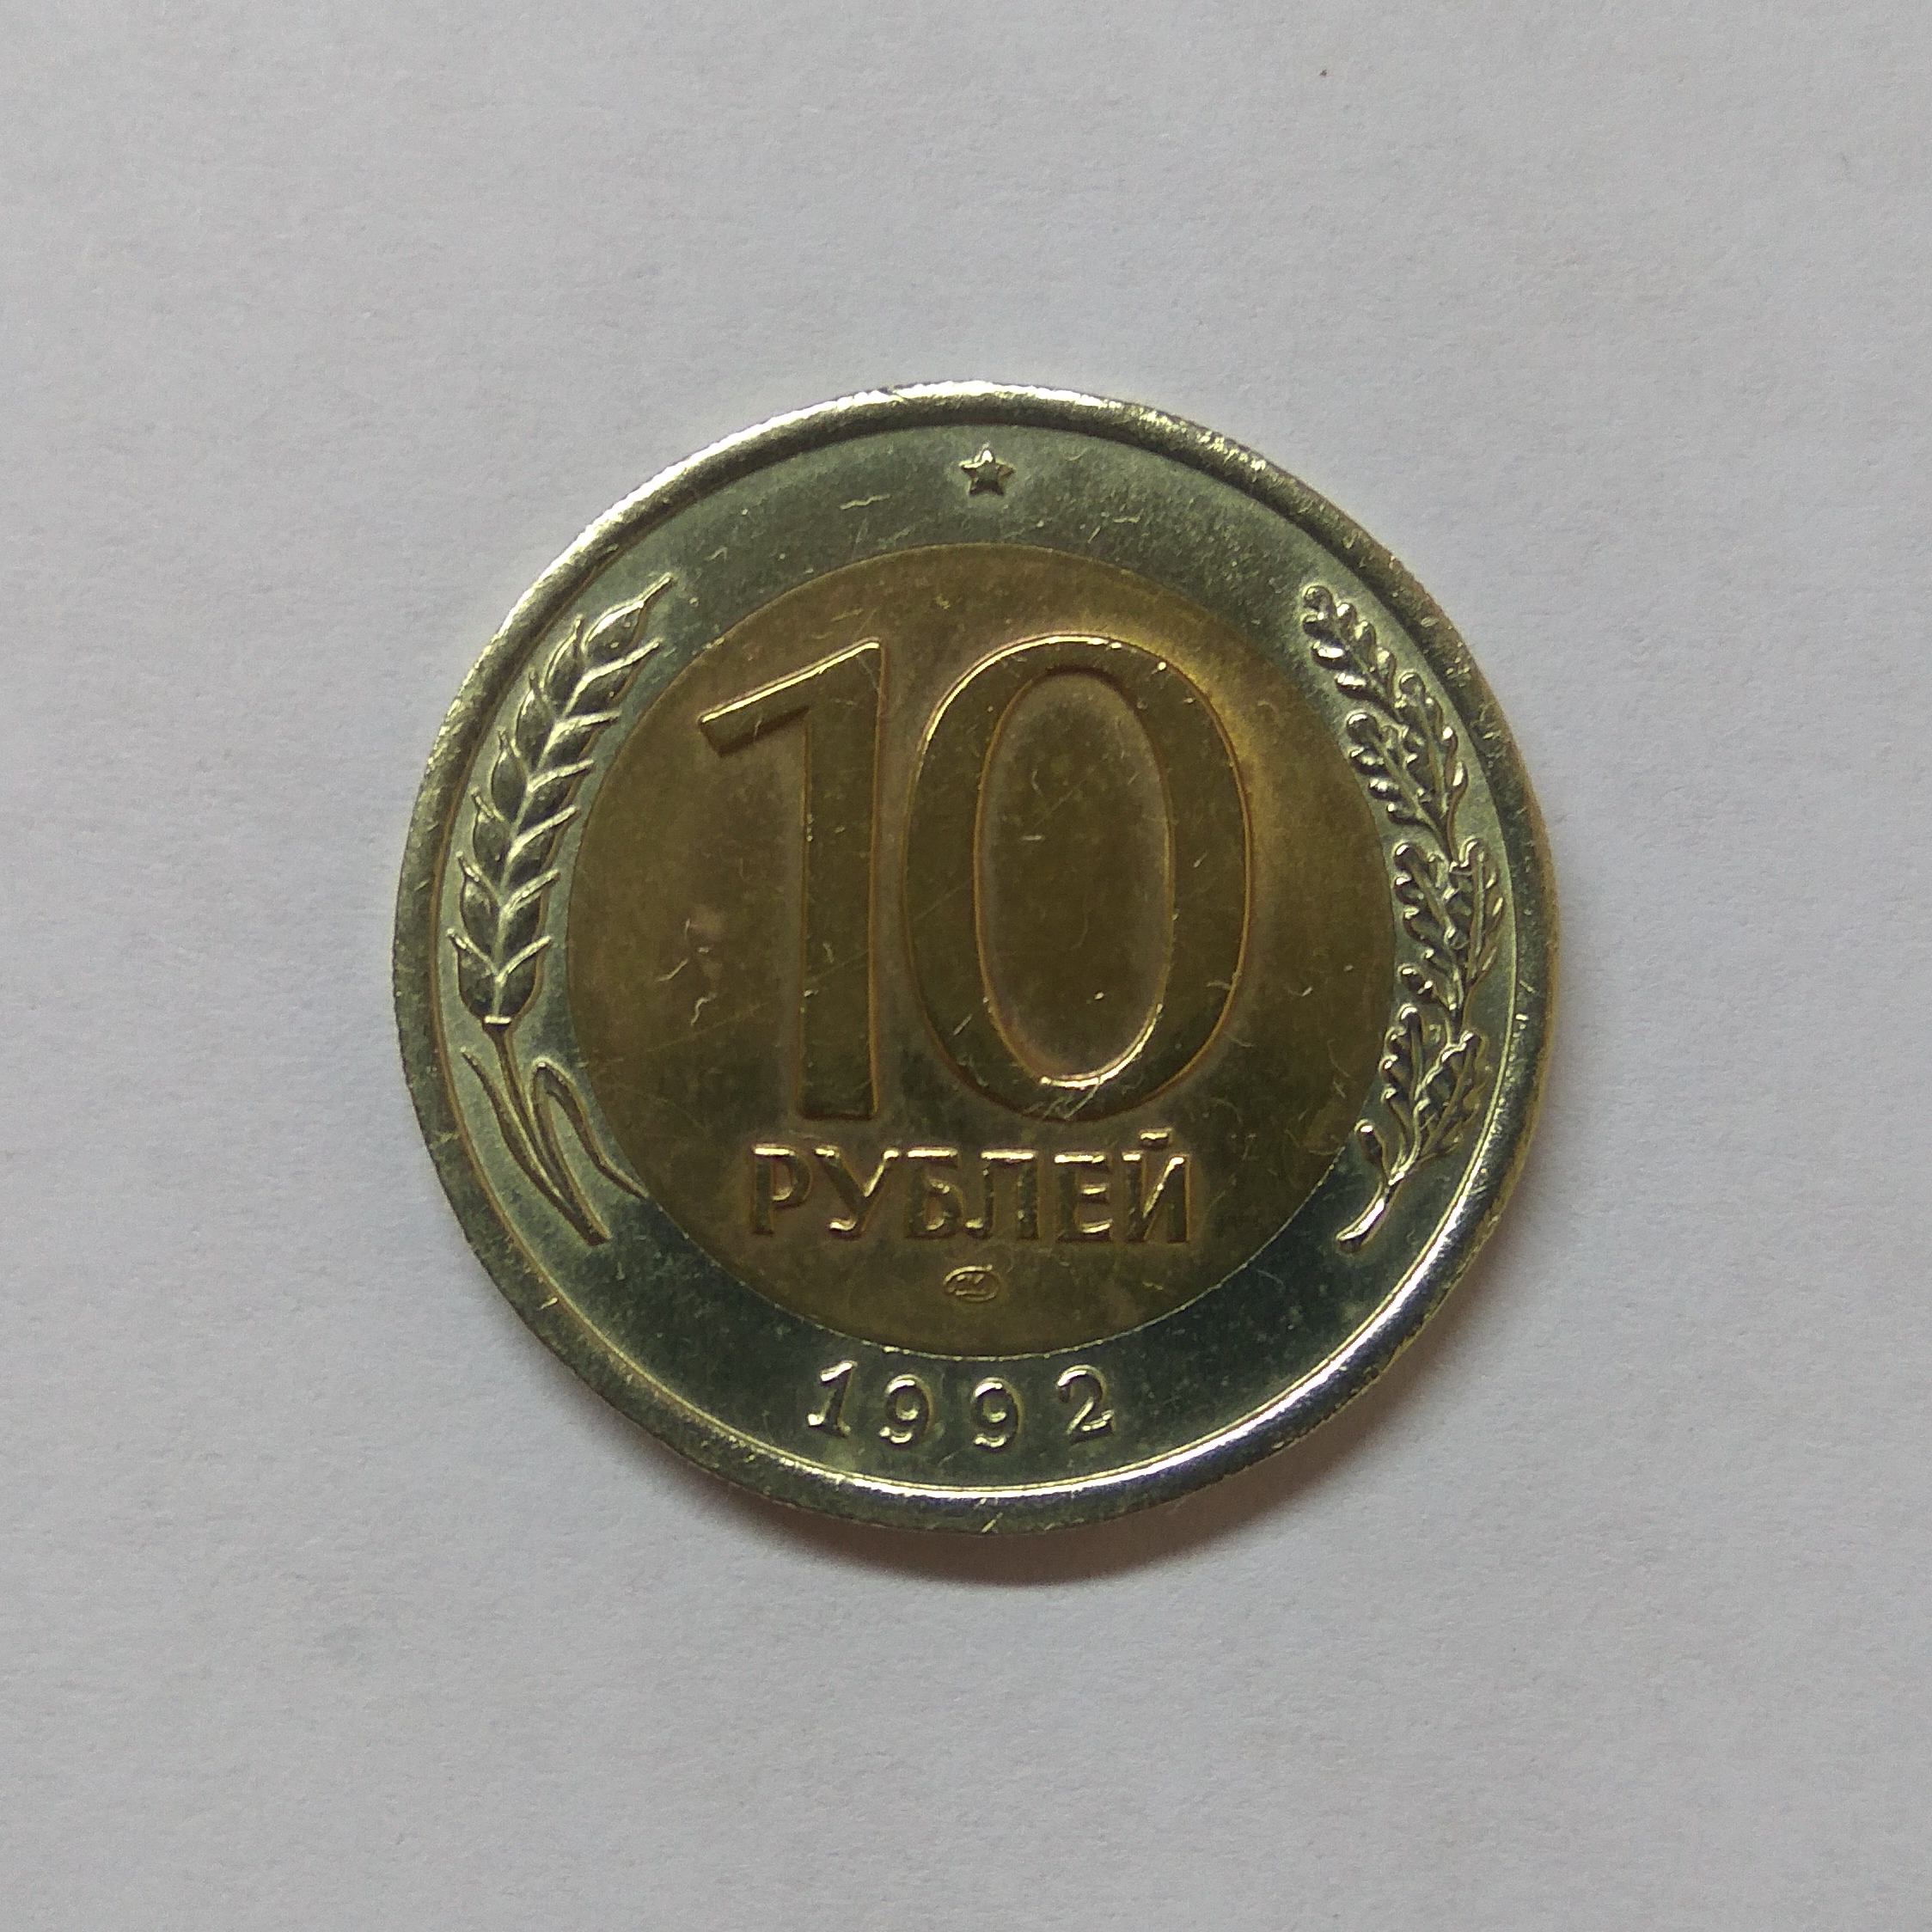 50 рублей 20 копеек. 10 Рублей 1991 ЛМД. 10 Рублей 1991 Биметалл. 50 Рублей 1991 года. Монеты 10 рублей 1991г.